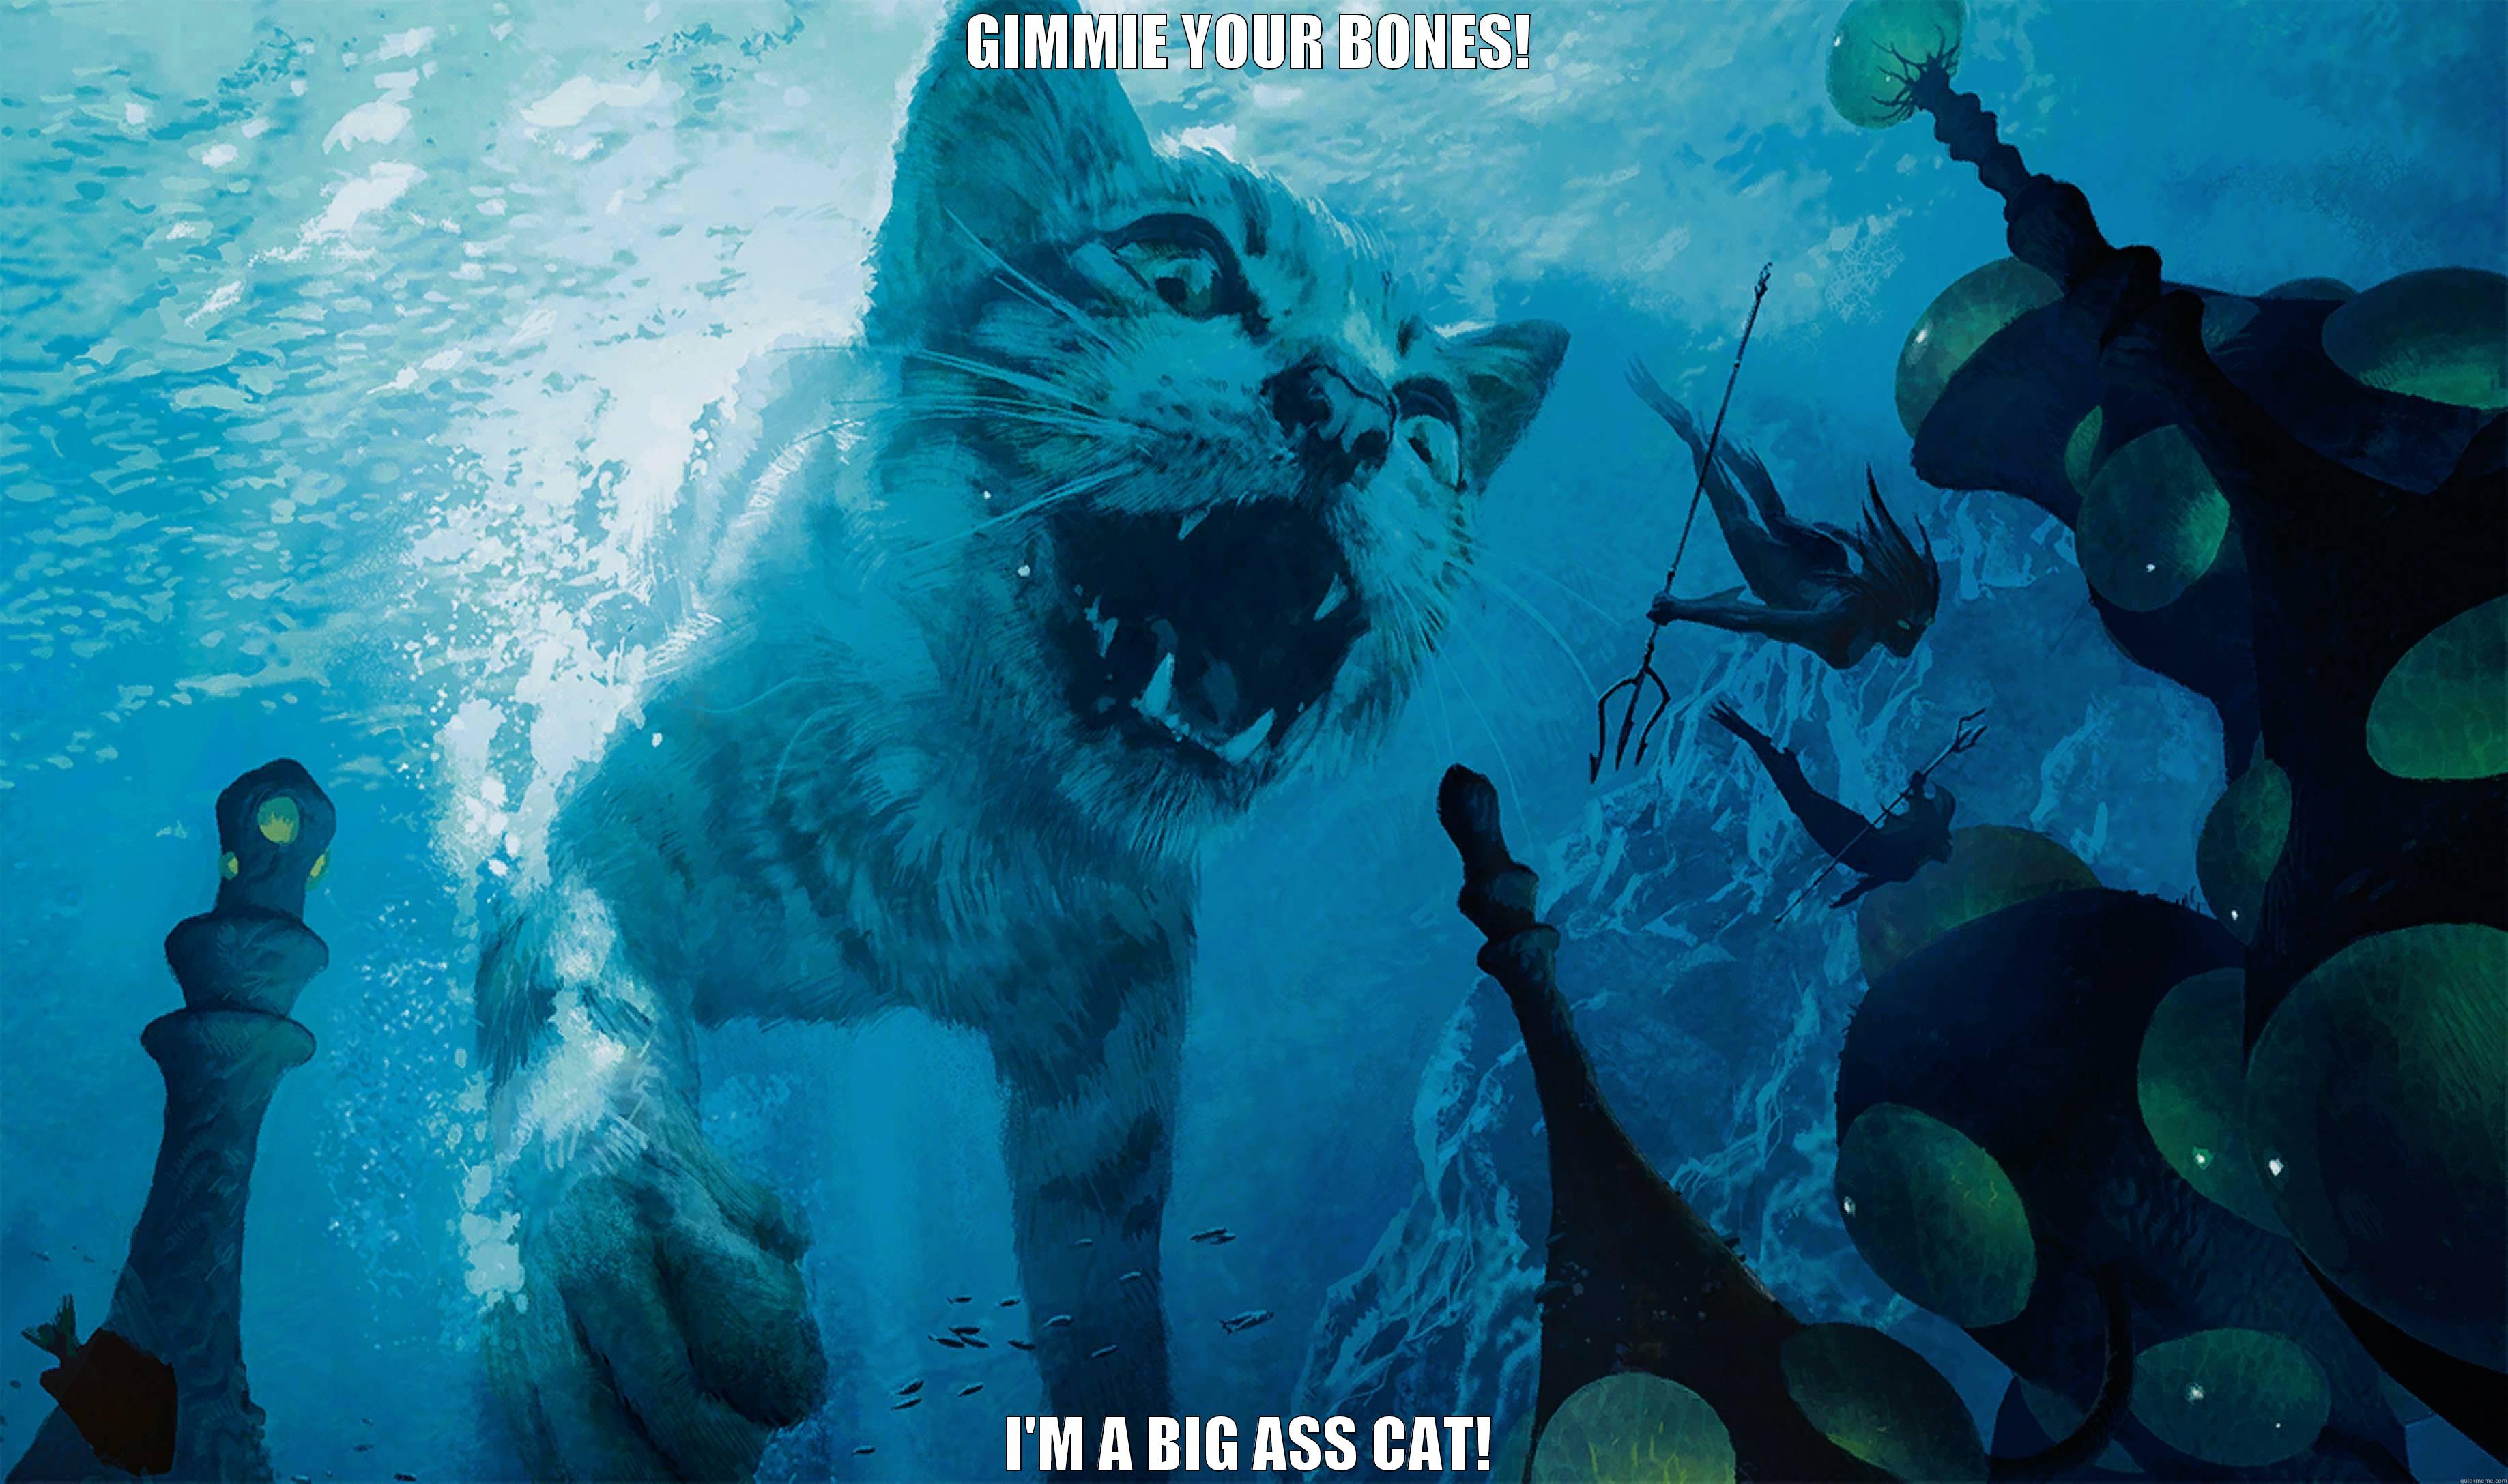 GIMMIE YOUR BONES! I'M A BIG ASS CAT! Misc